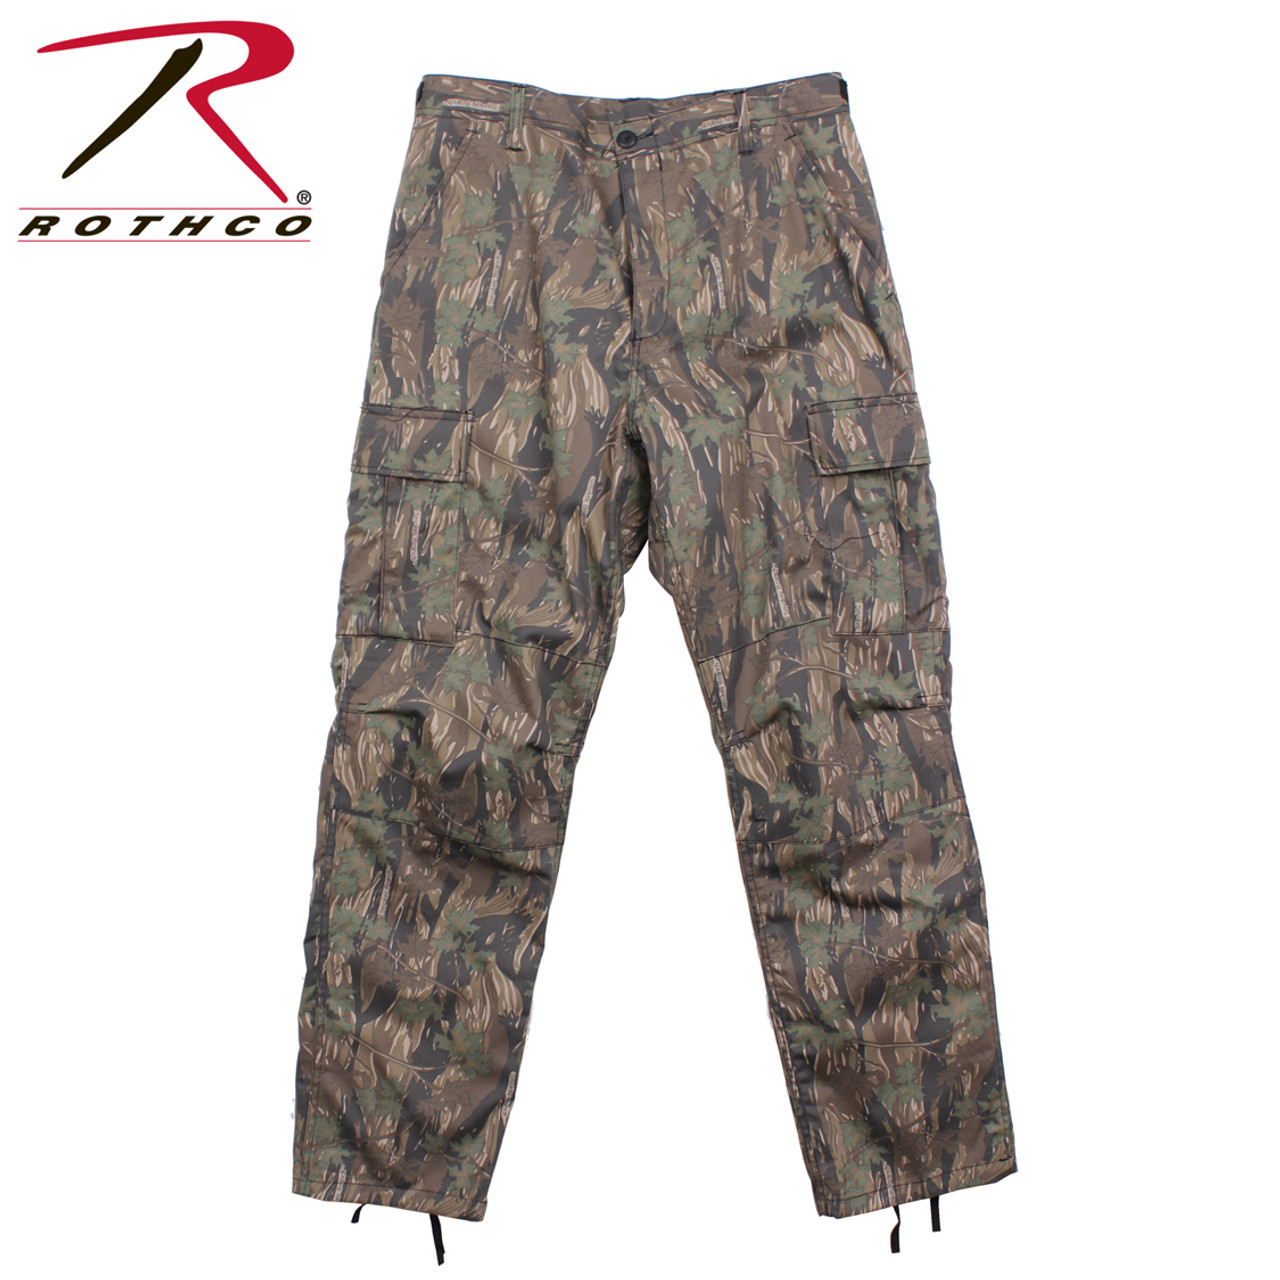 Shop Rothco Smokey Branch Camo BDU Pants - Fatigues Army Navy Gear